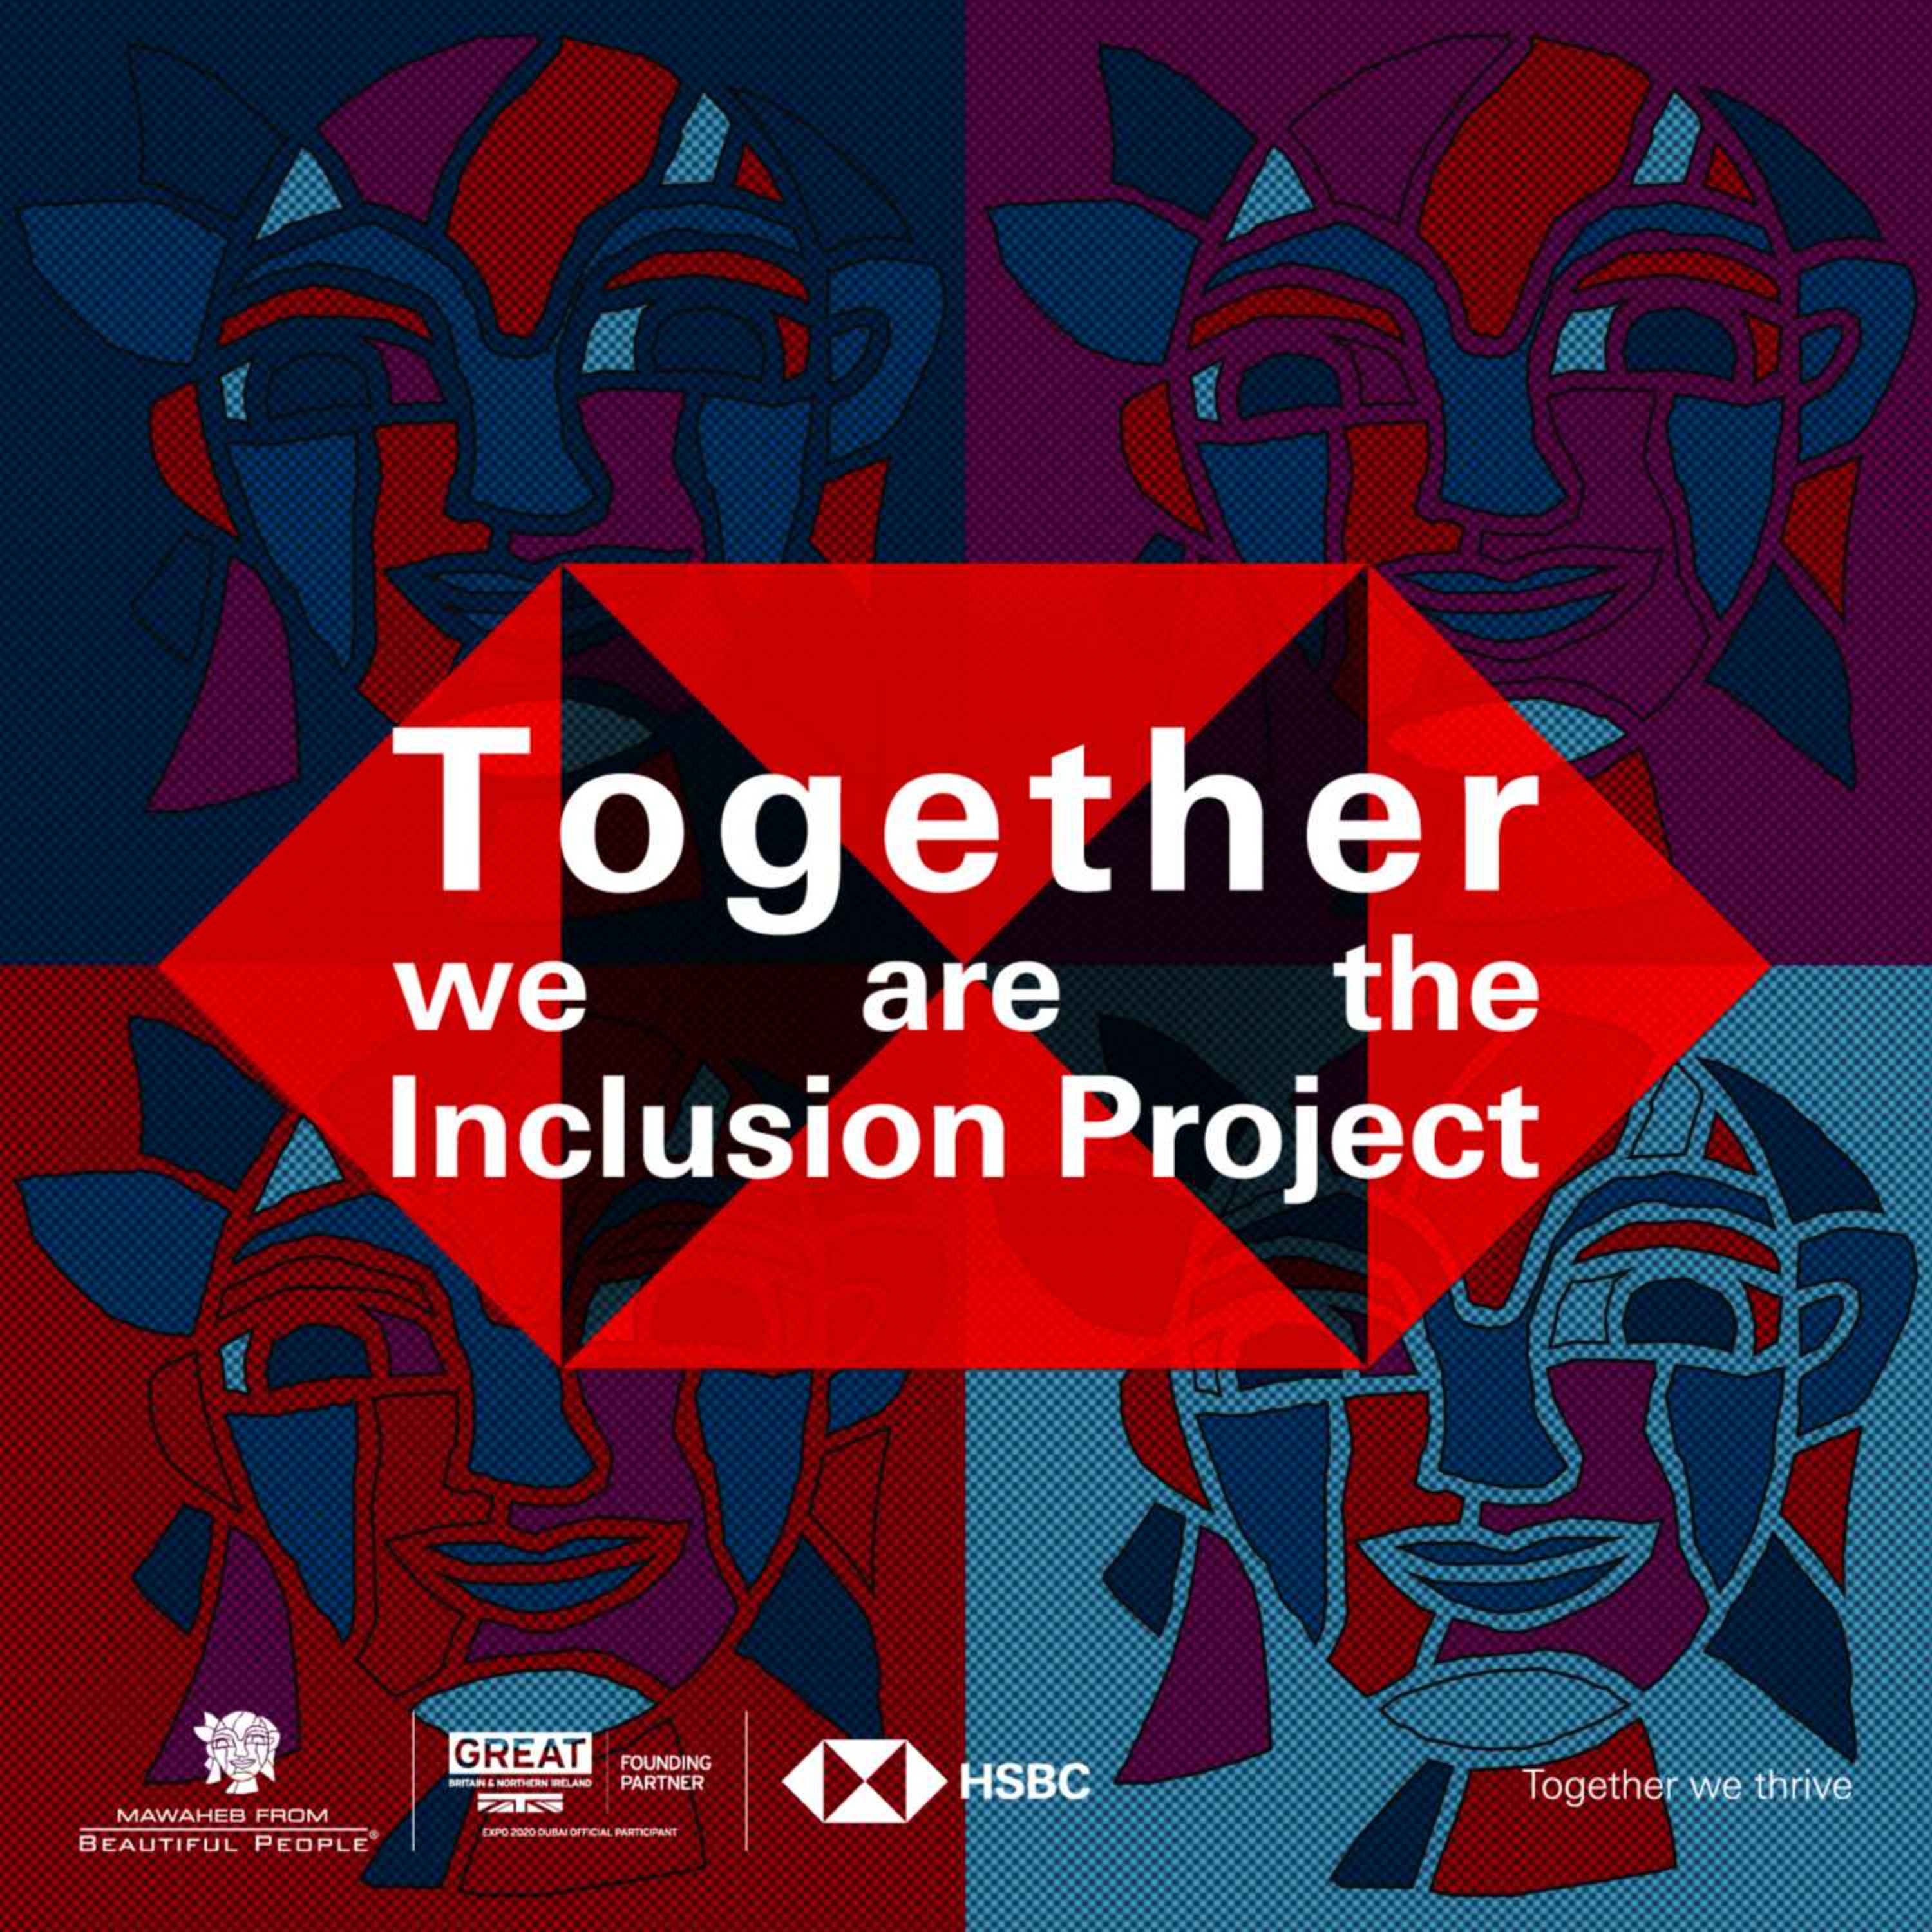 The Inclusion Project: Creating a More Inclusive Future